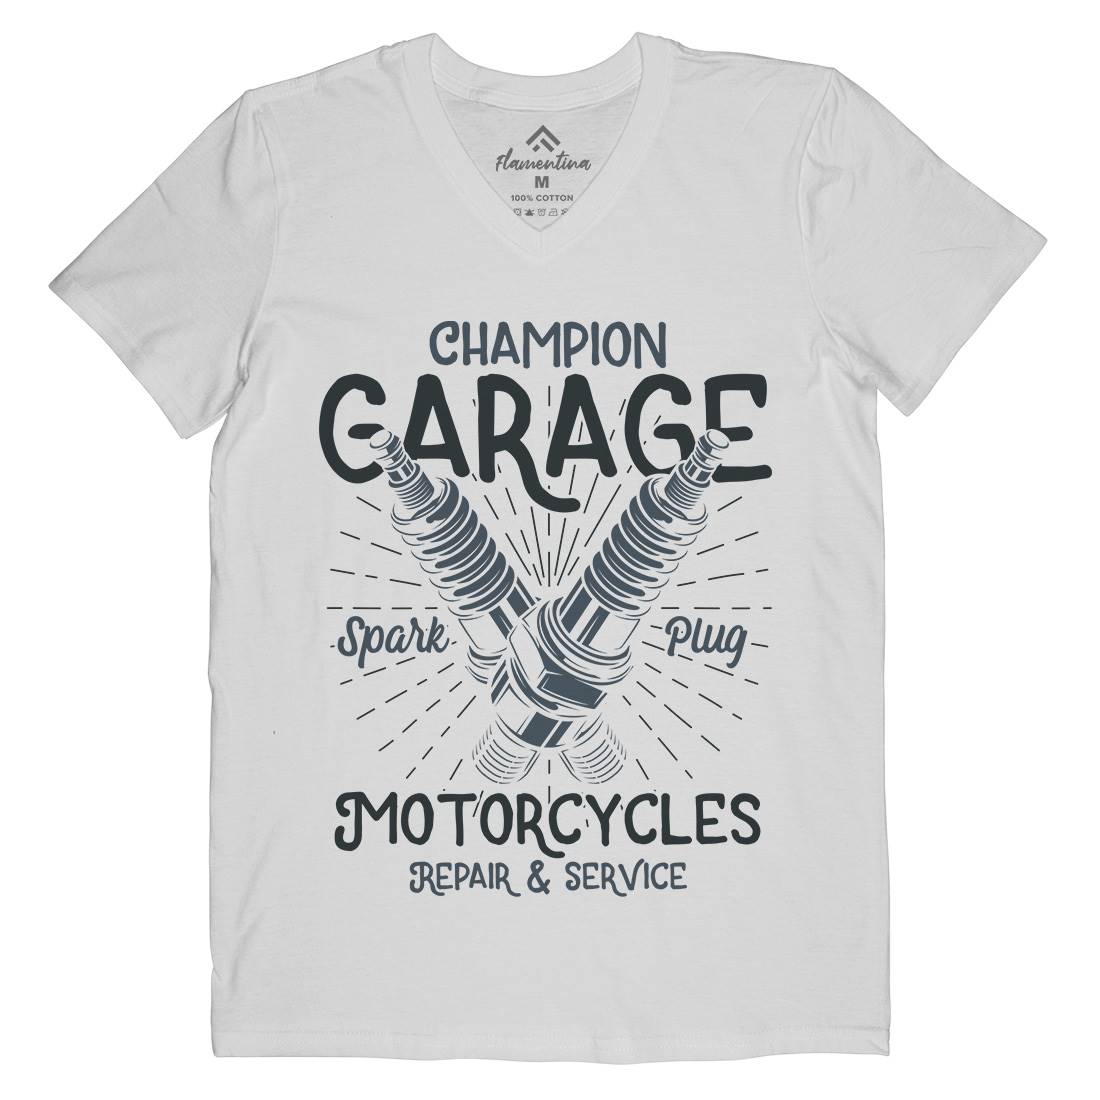 Champion Garage Mens Organic V-Neck T-Shirt Motorcycles B835